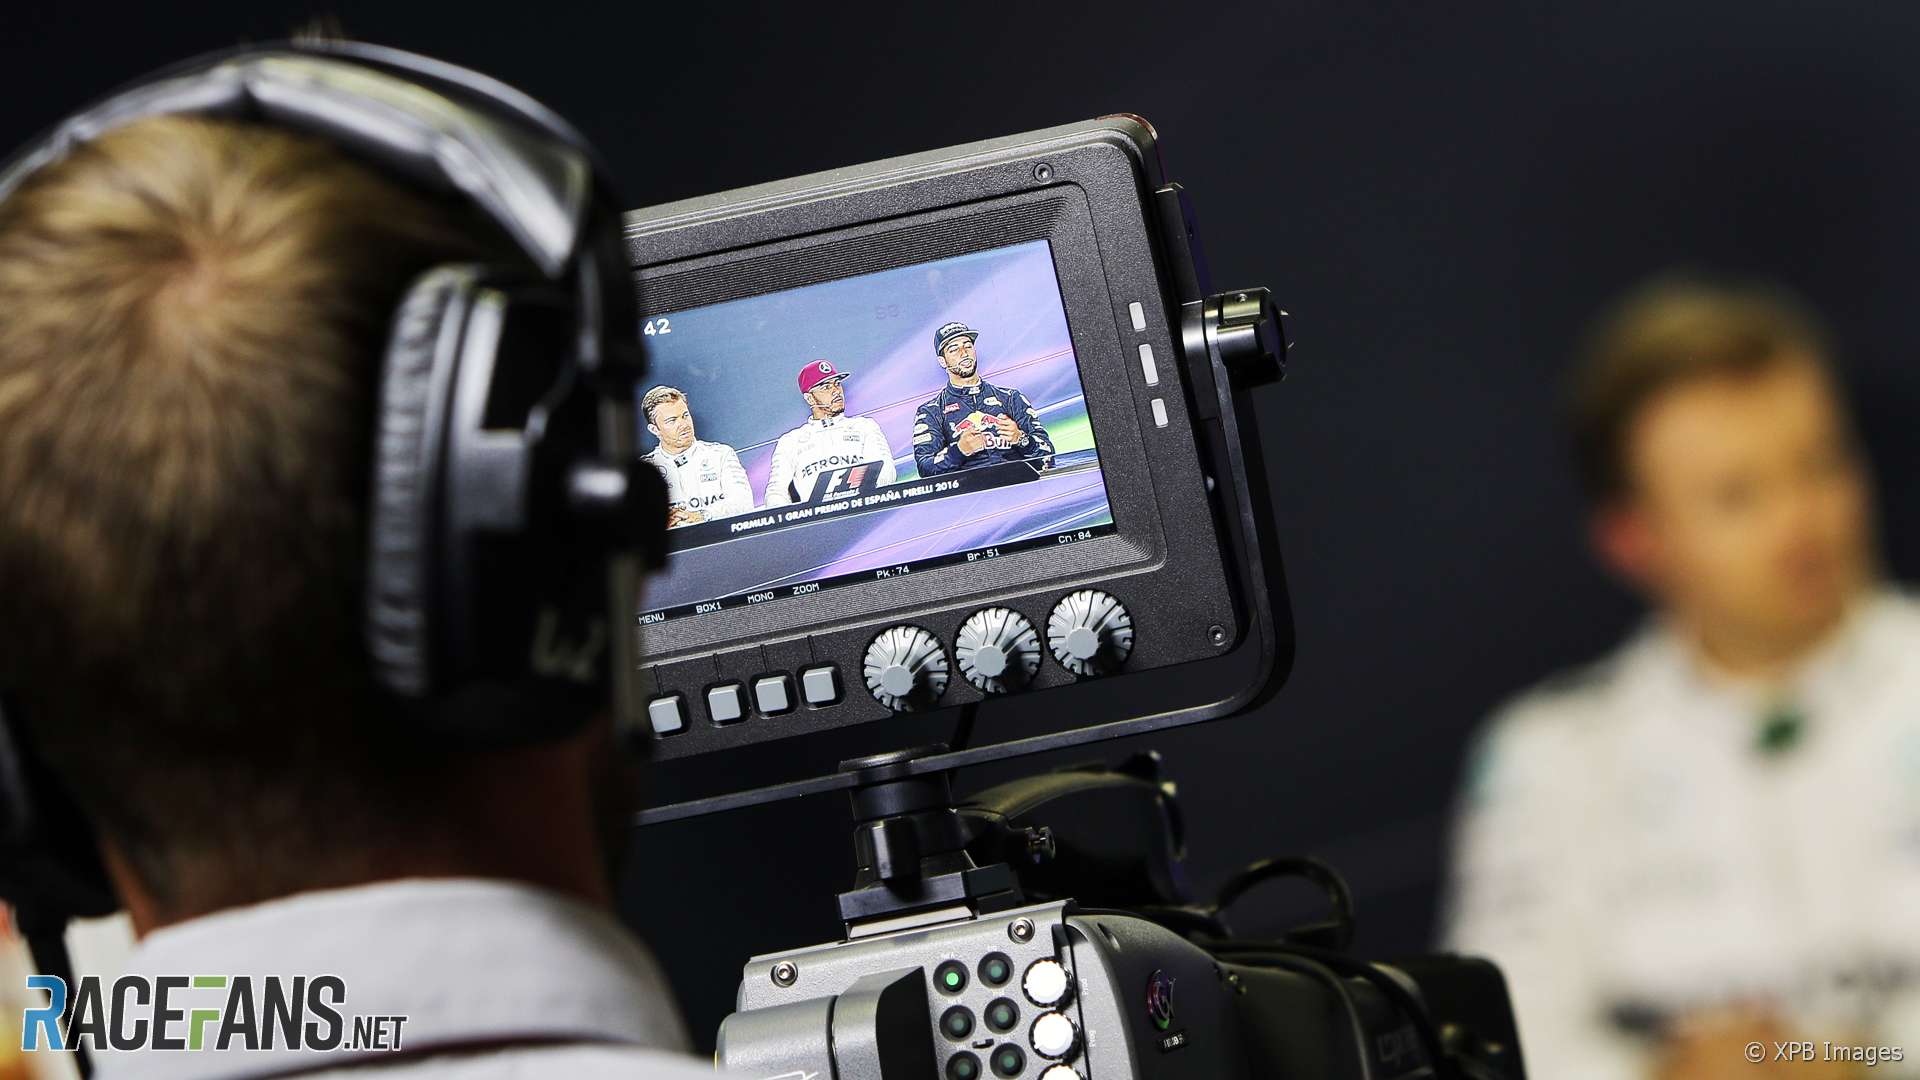 F1 television camera, 2017